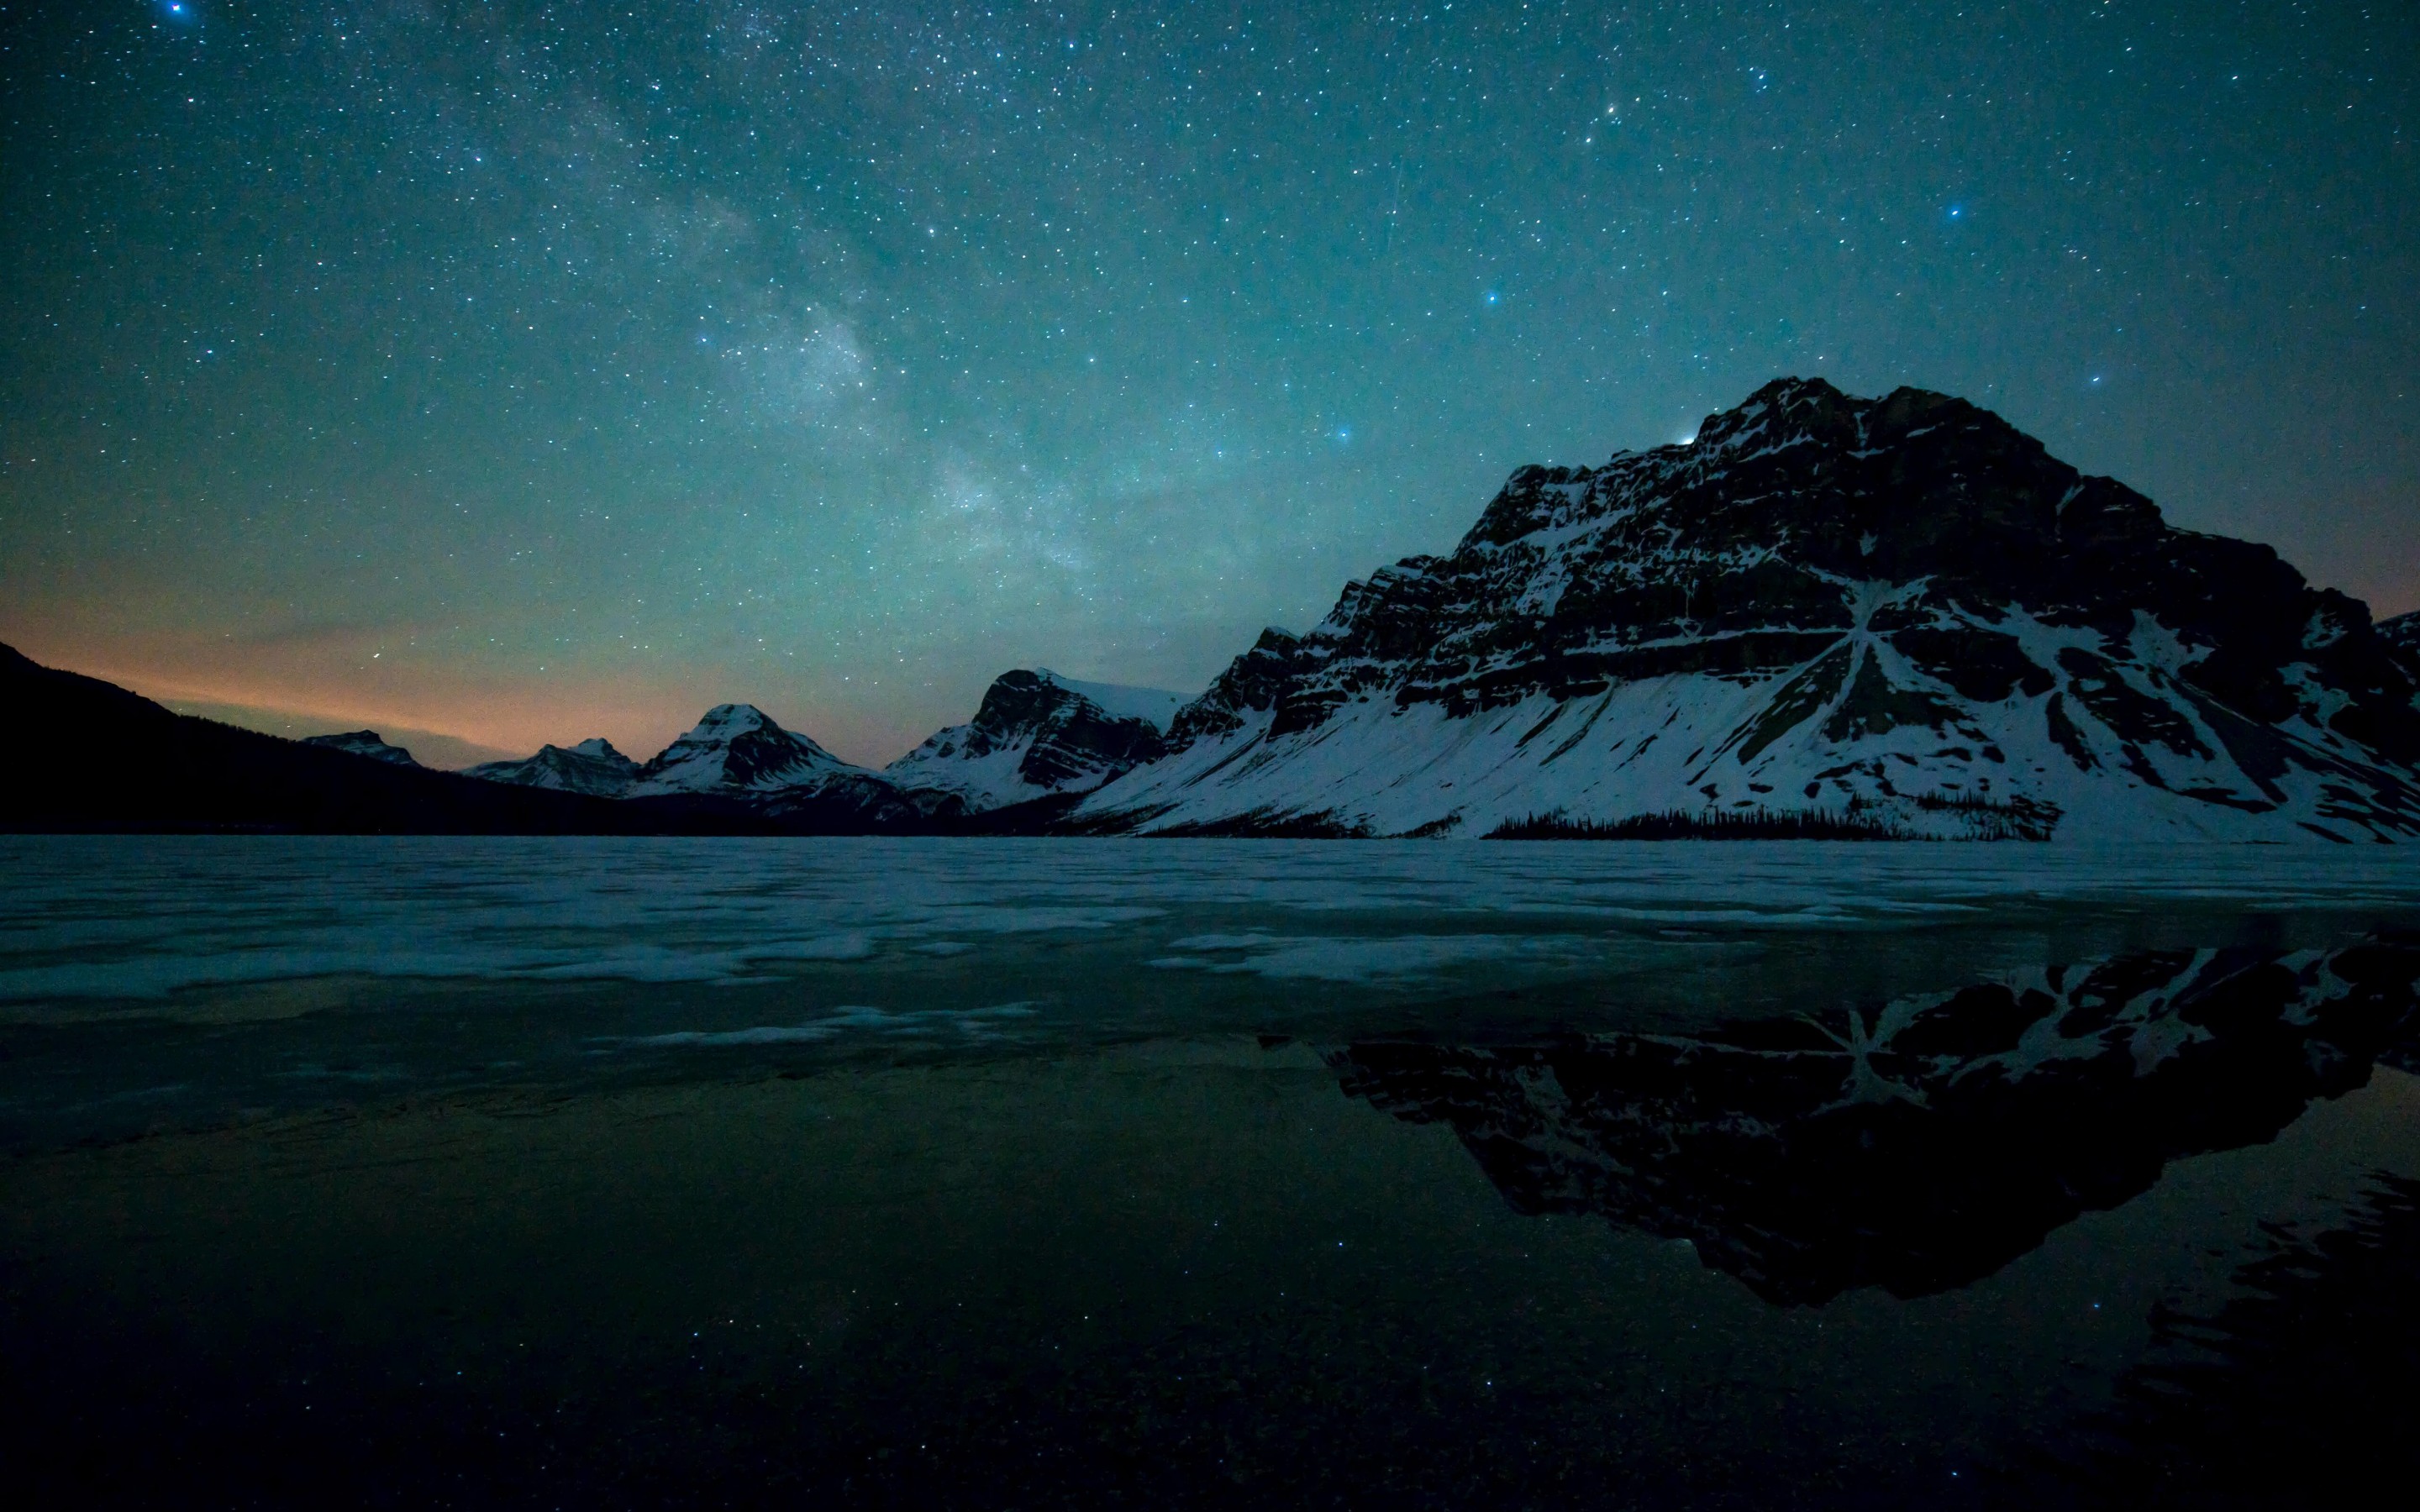 Milky Way over Bow Lake, Alberta, Canada Wallpaper for Desktop 2880x1800